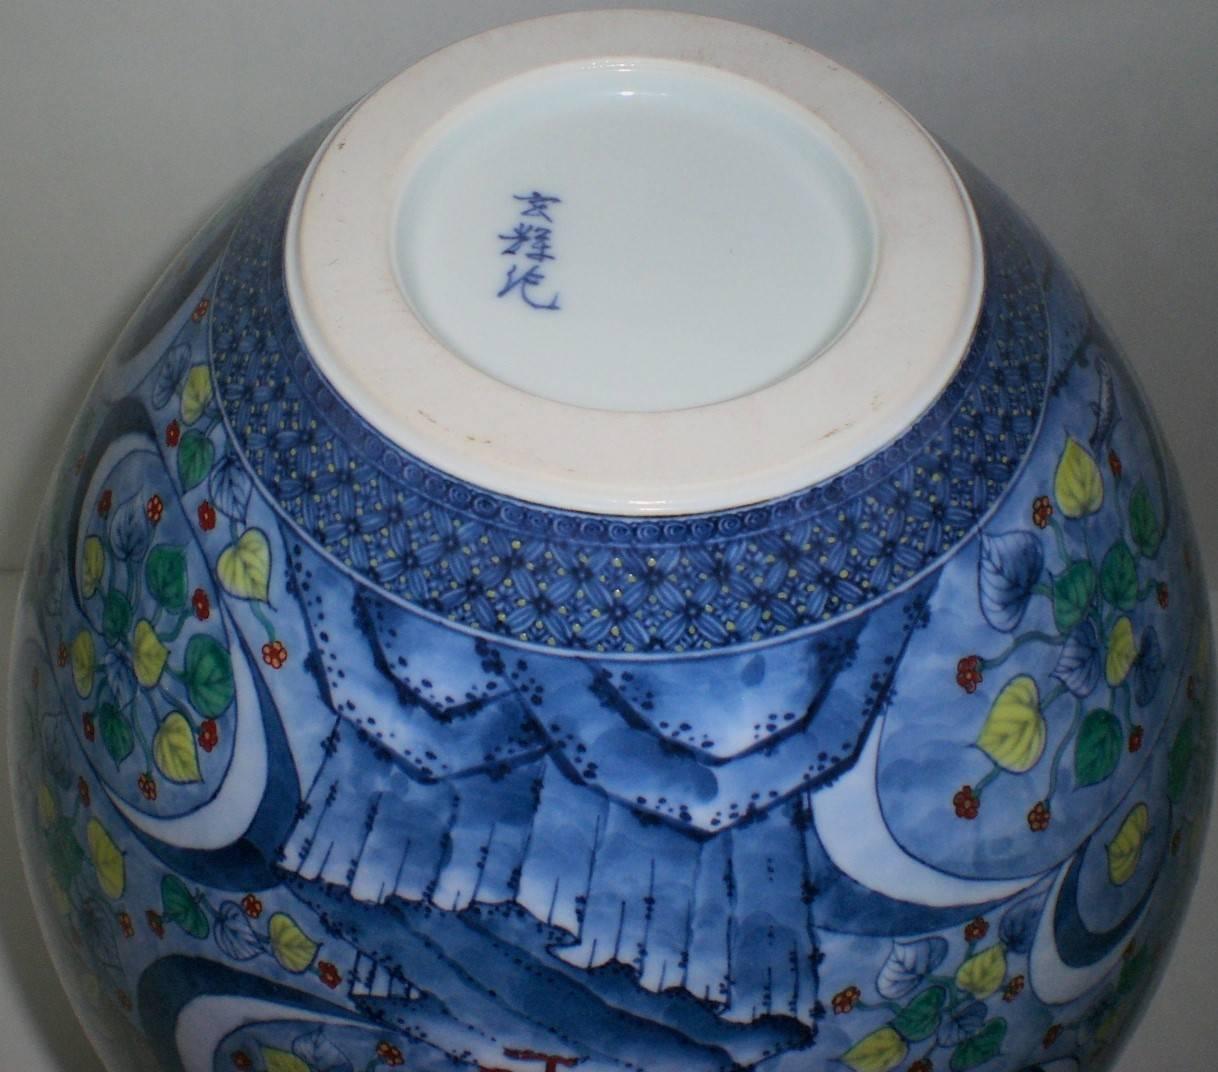 Contemporary Large Japanese Hand-Painted Imari Porcelain Vase by Master Artist, circa 2005